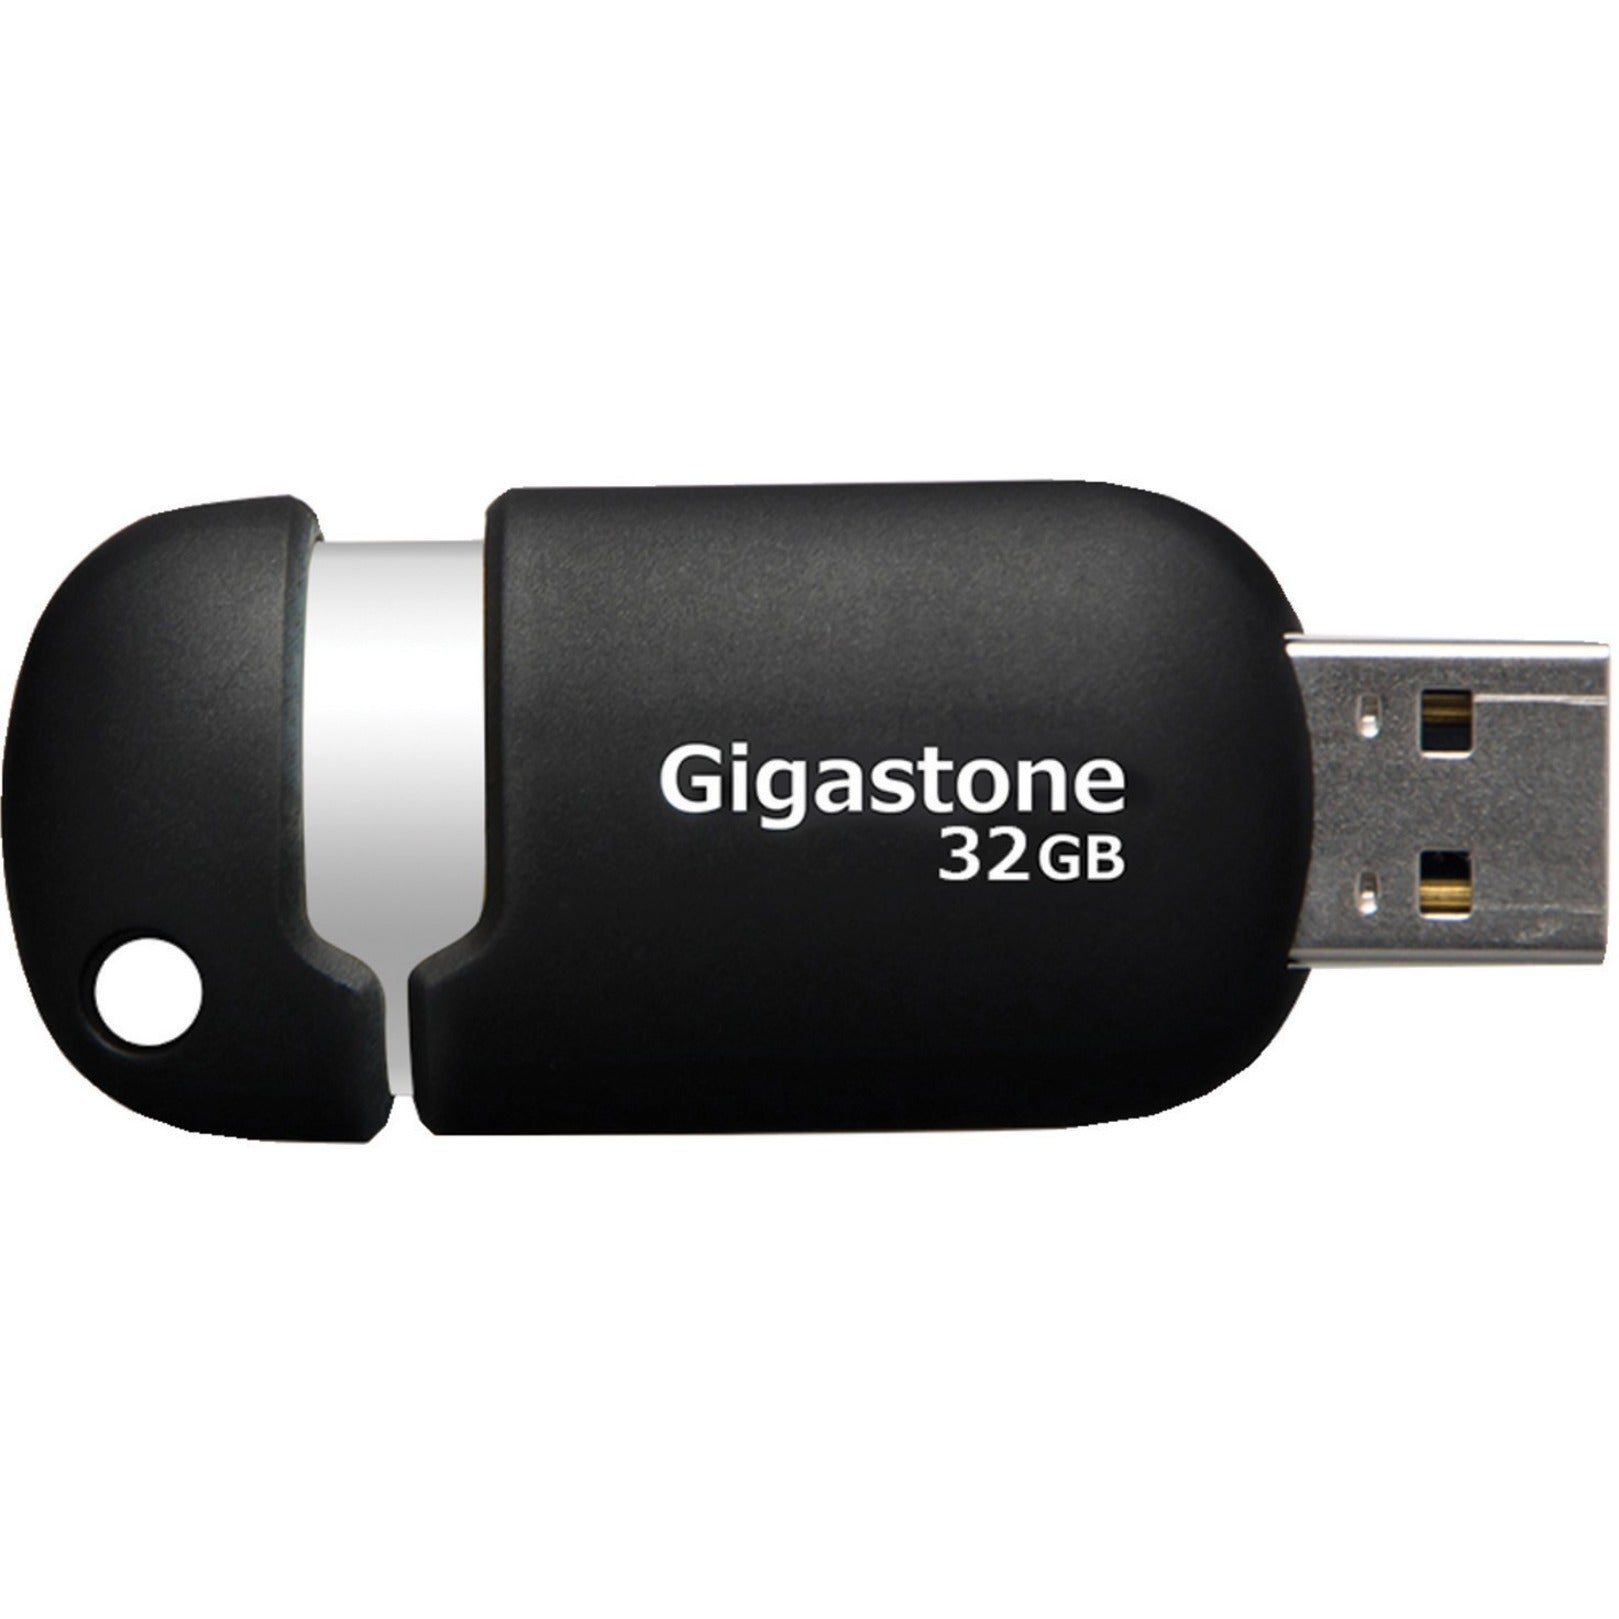 Gigastone GS-Z32GCNBL-R 32GB Classic USB 2.0 Flash Drive, 5 Year Warranty, Retail Package